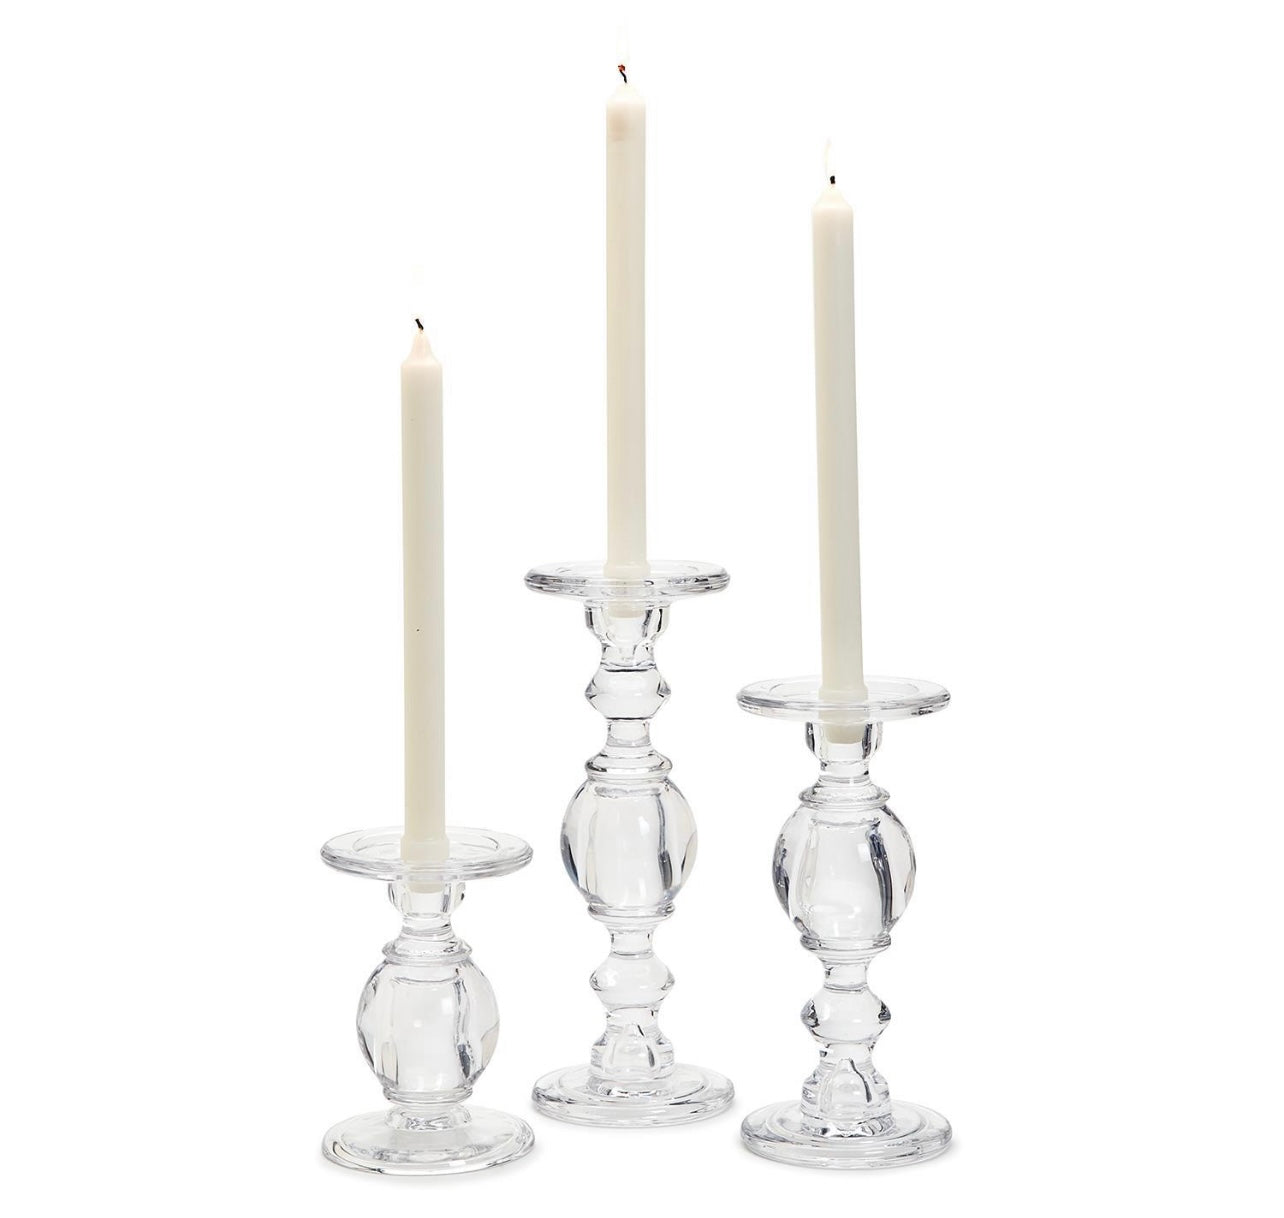 Pedestal Candleholders -set of 3